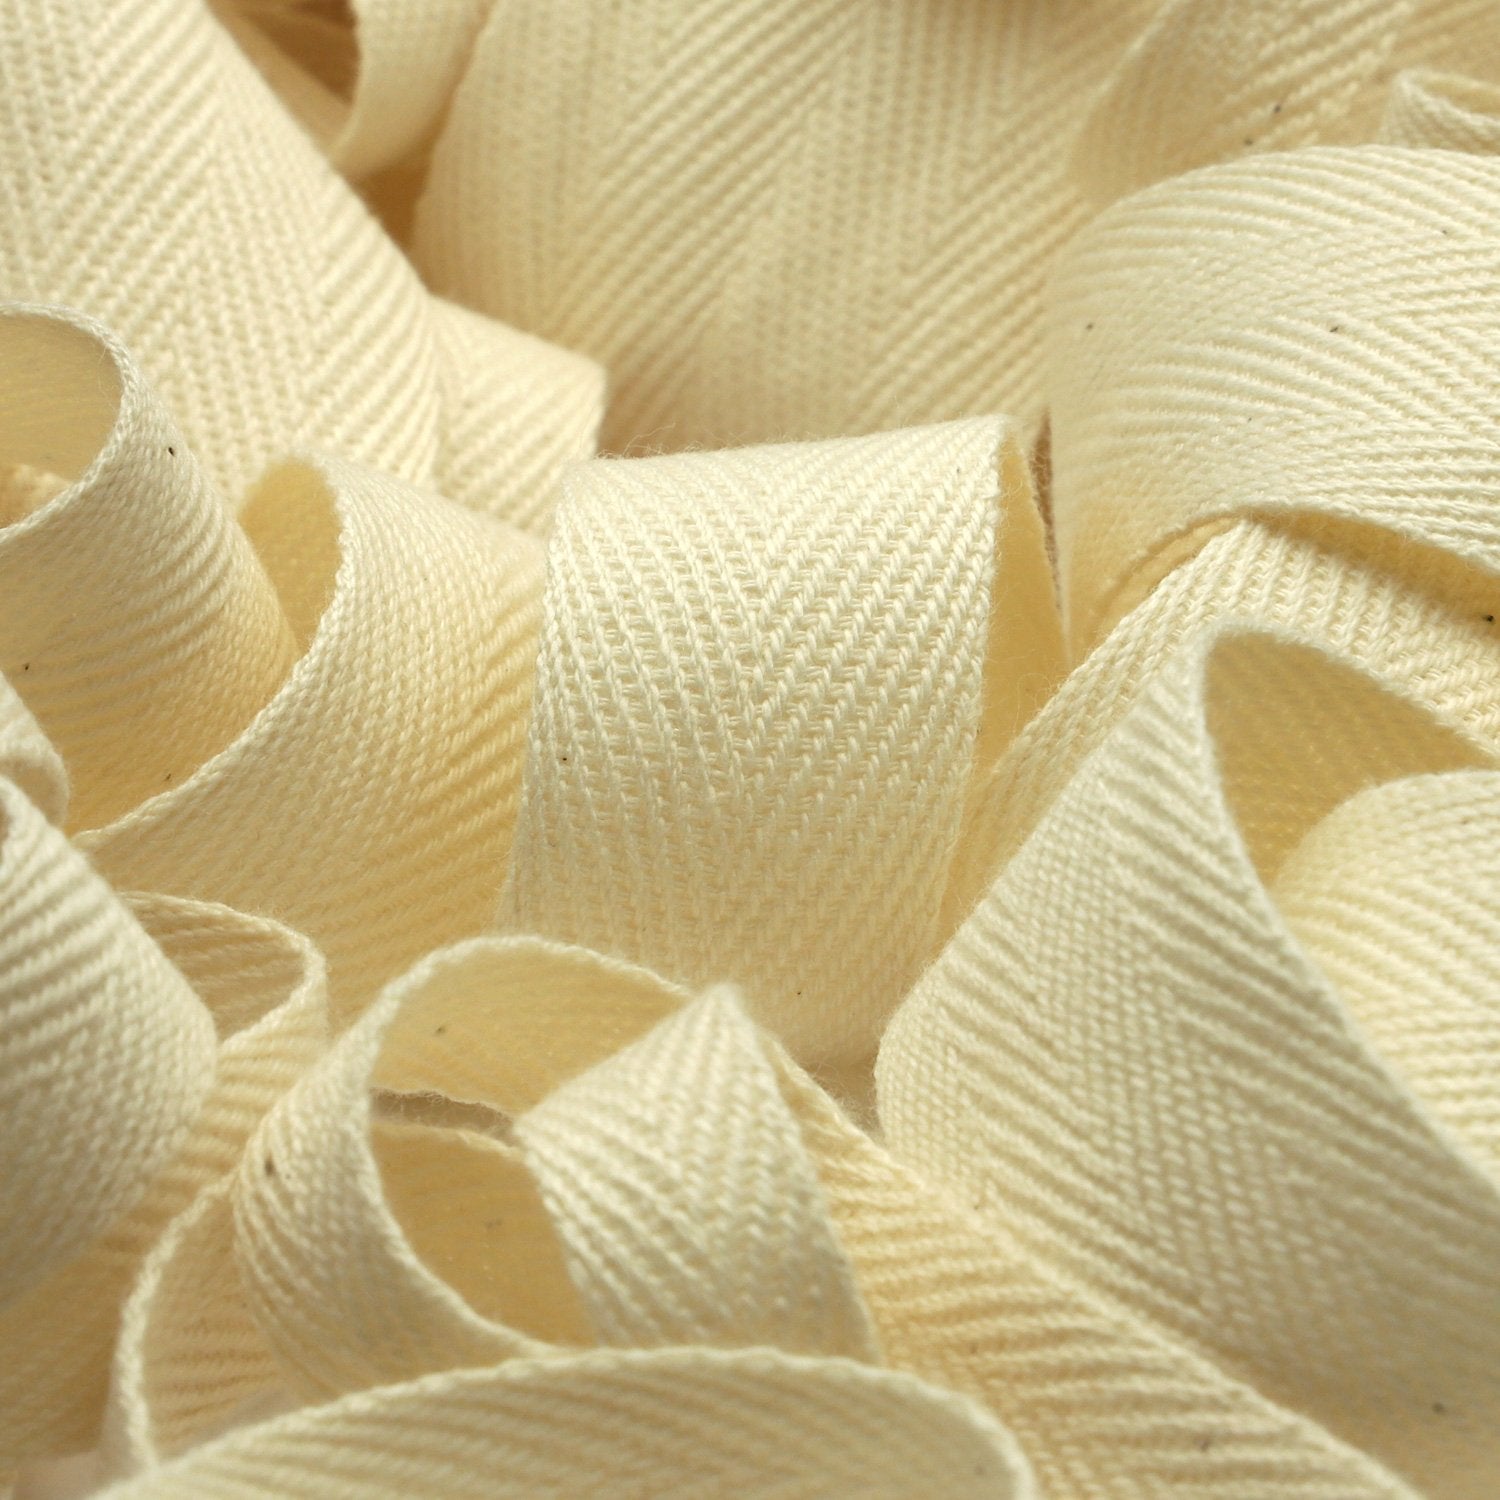 FUJIYAMA RIBBON Organic Cotton Herringbone Ribbon 30mm Ecru 9.14 Meters Roll